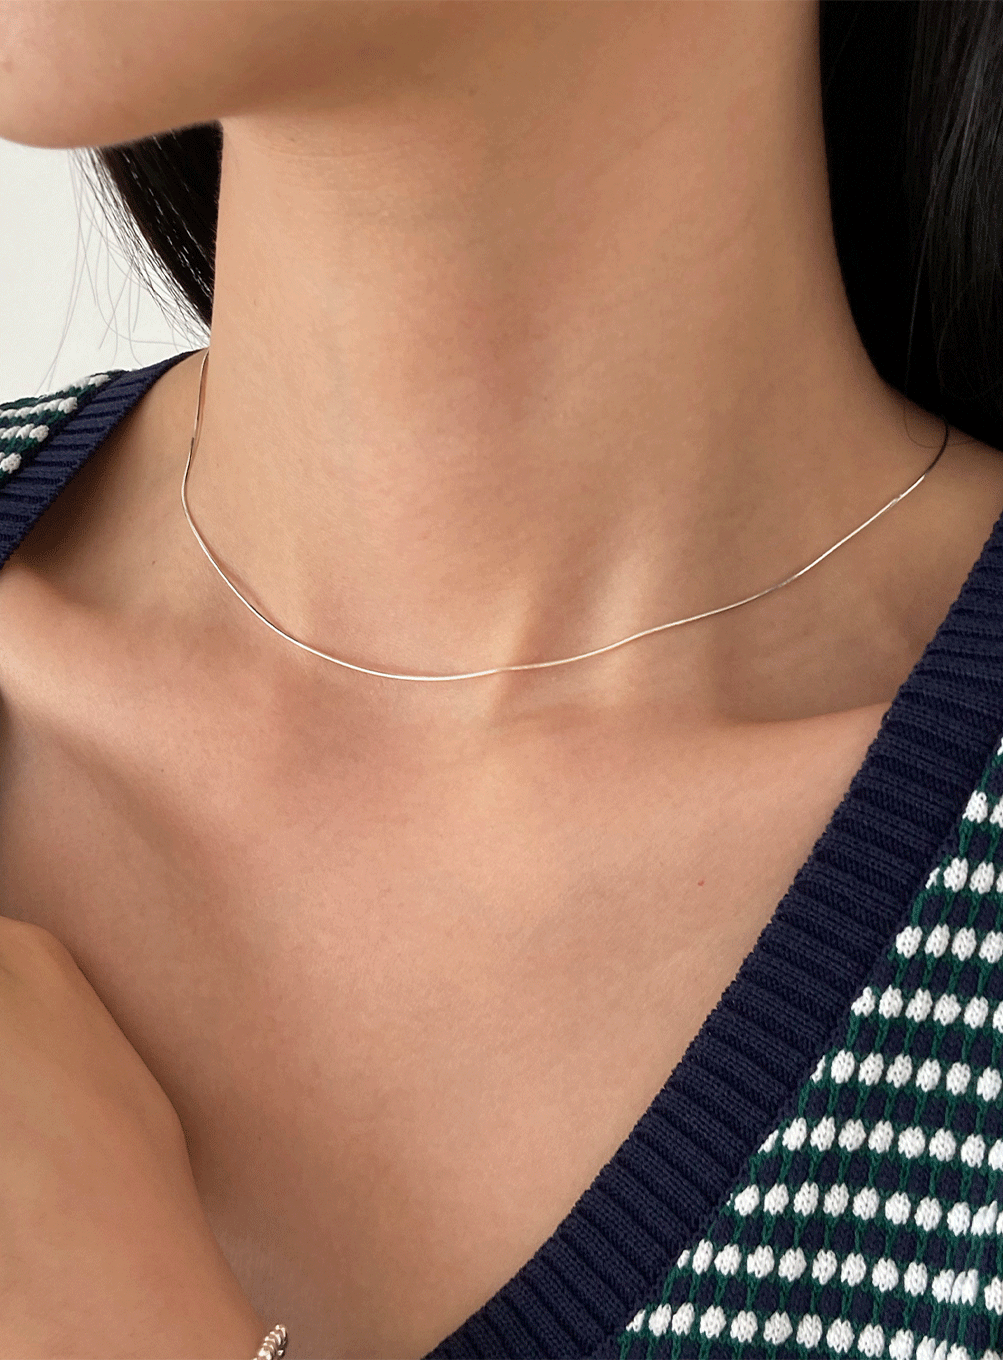 Thread necklace